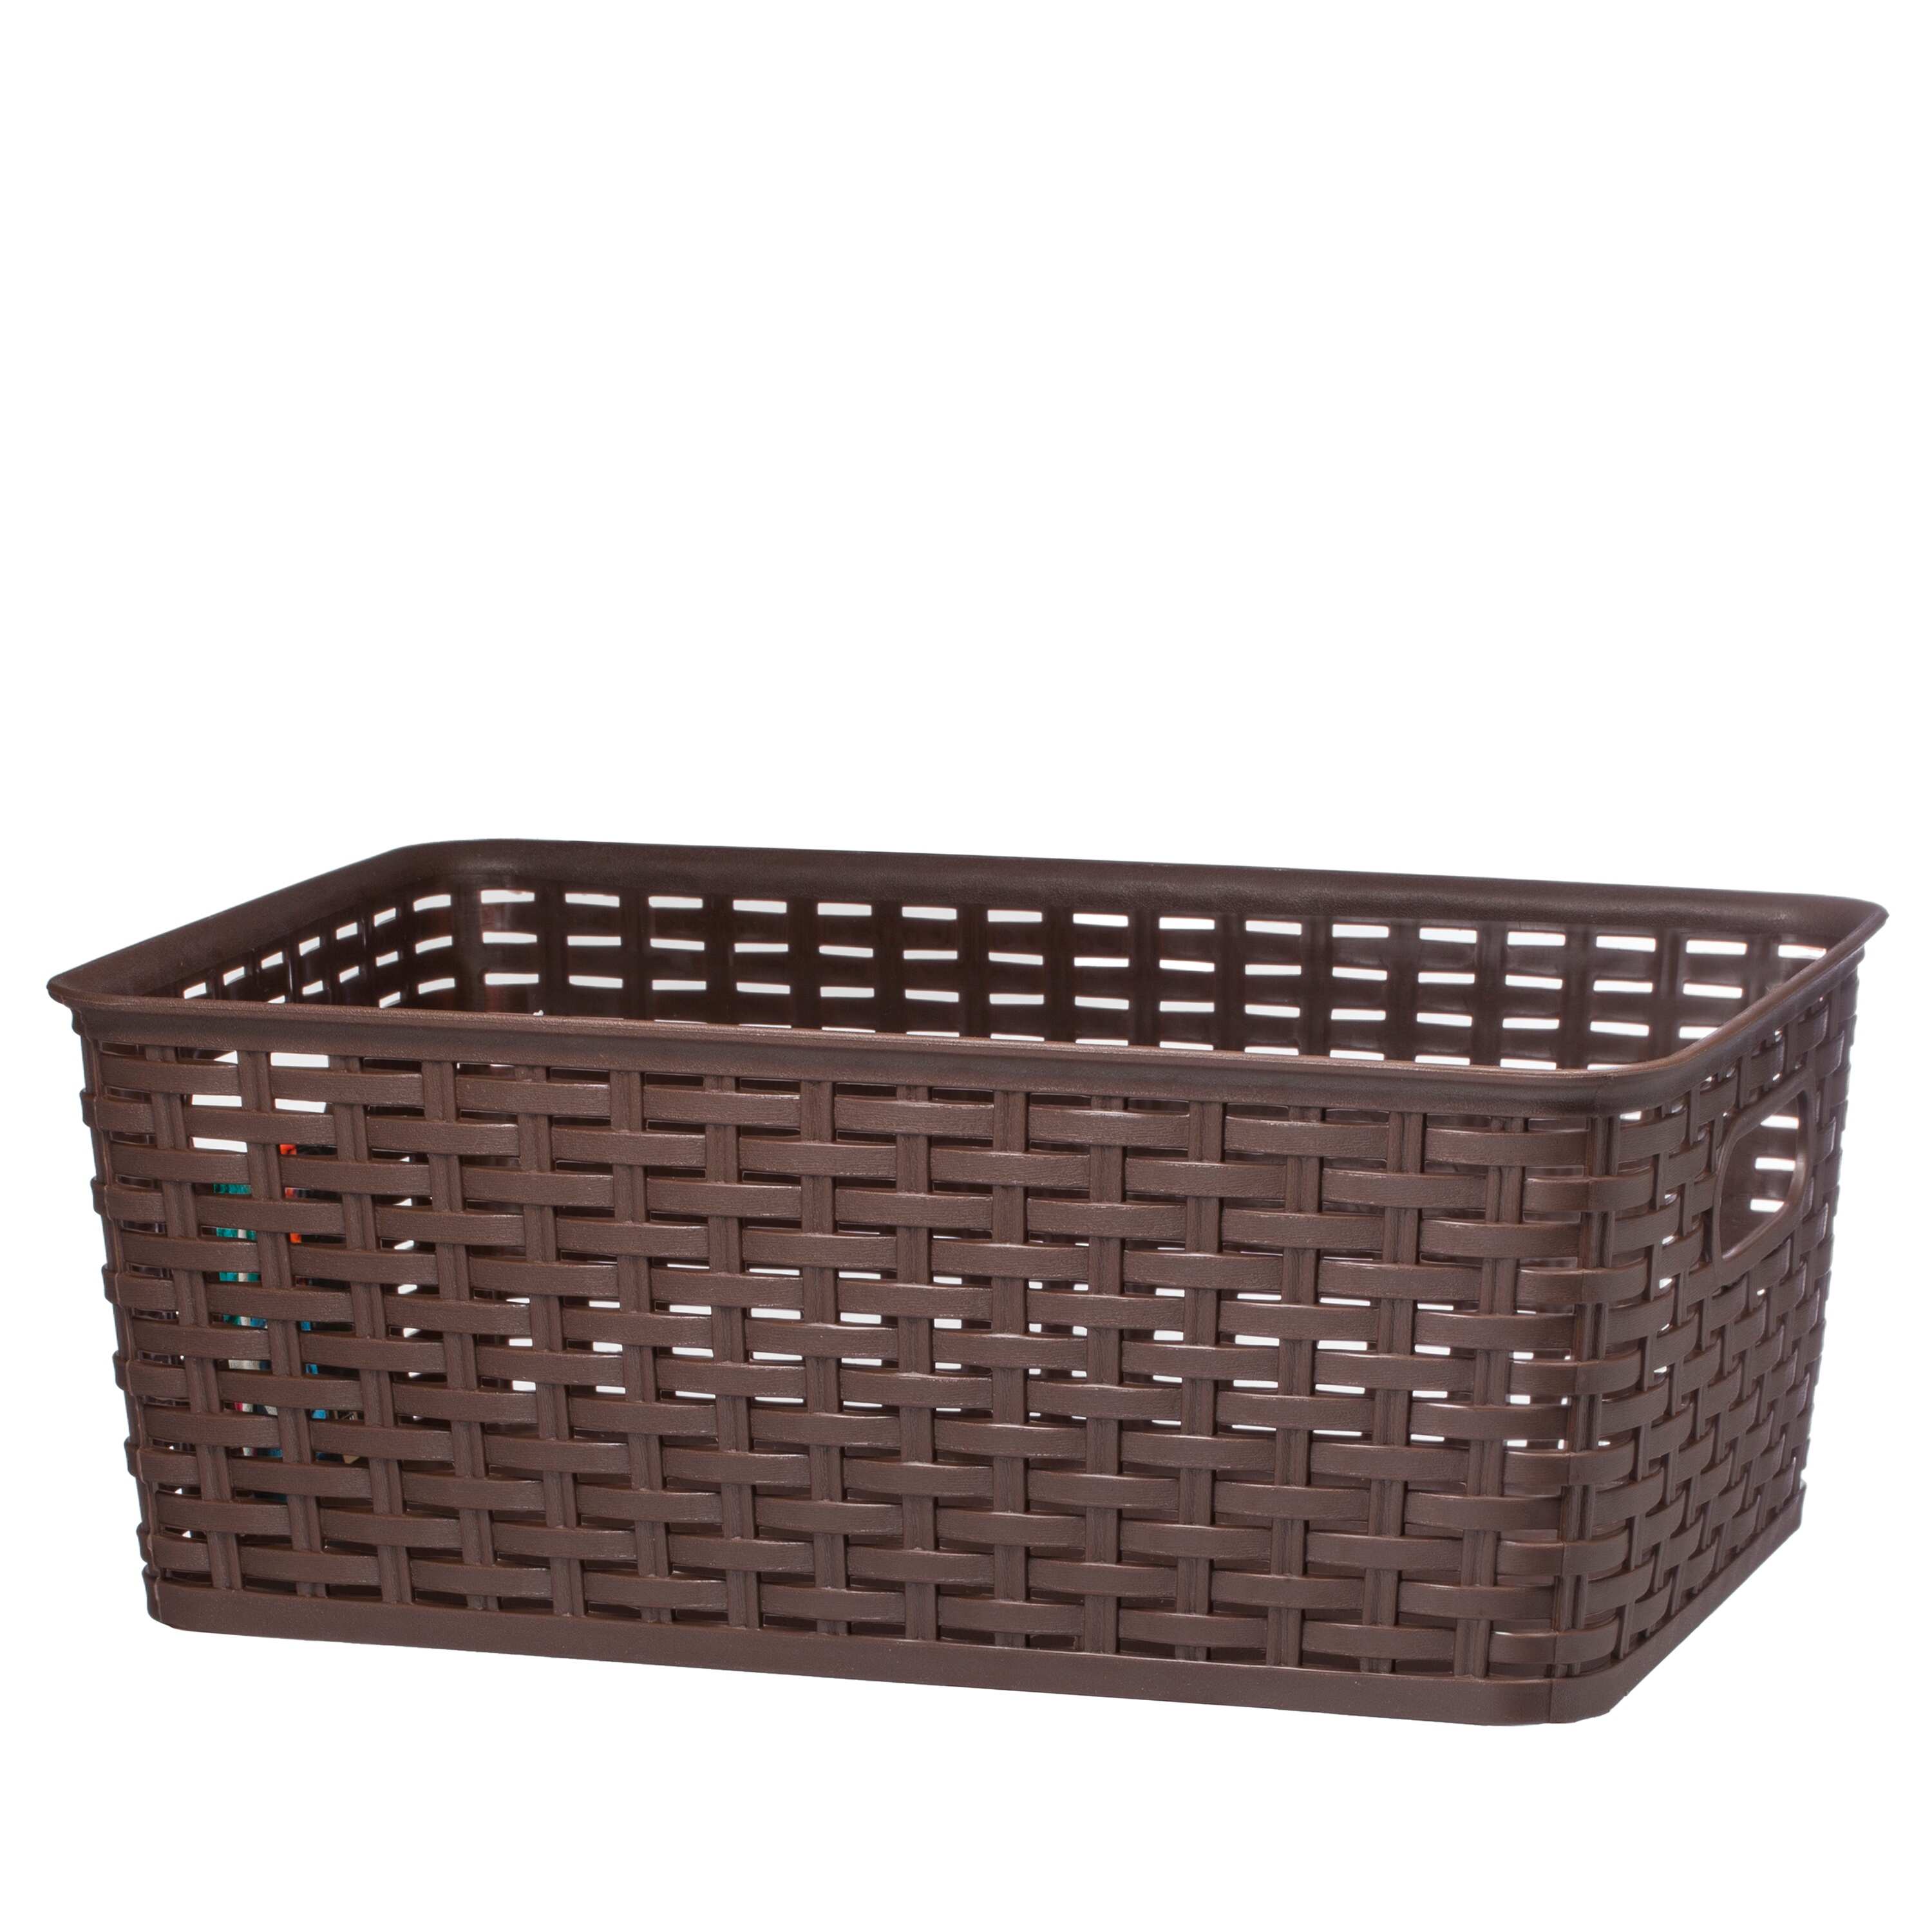 Raton Basket Medium 15 1/8 x 16 3/4 x 5 /78" - Brown - As Pictured